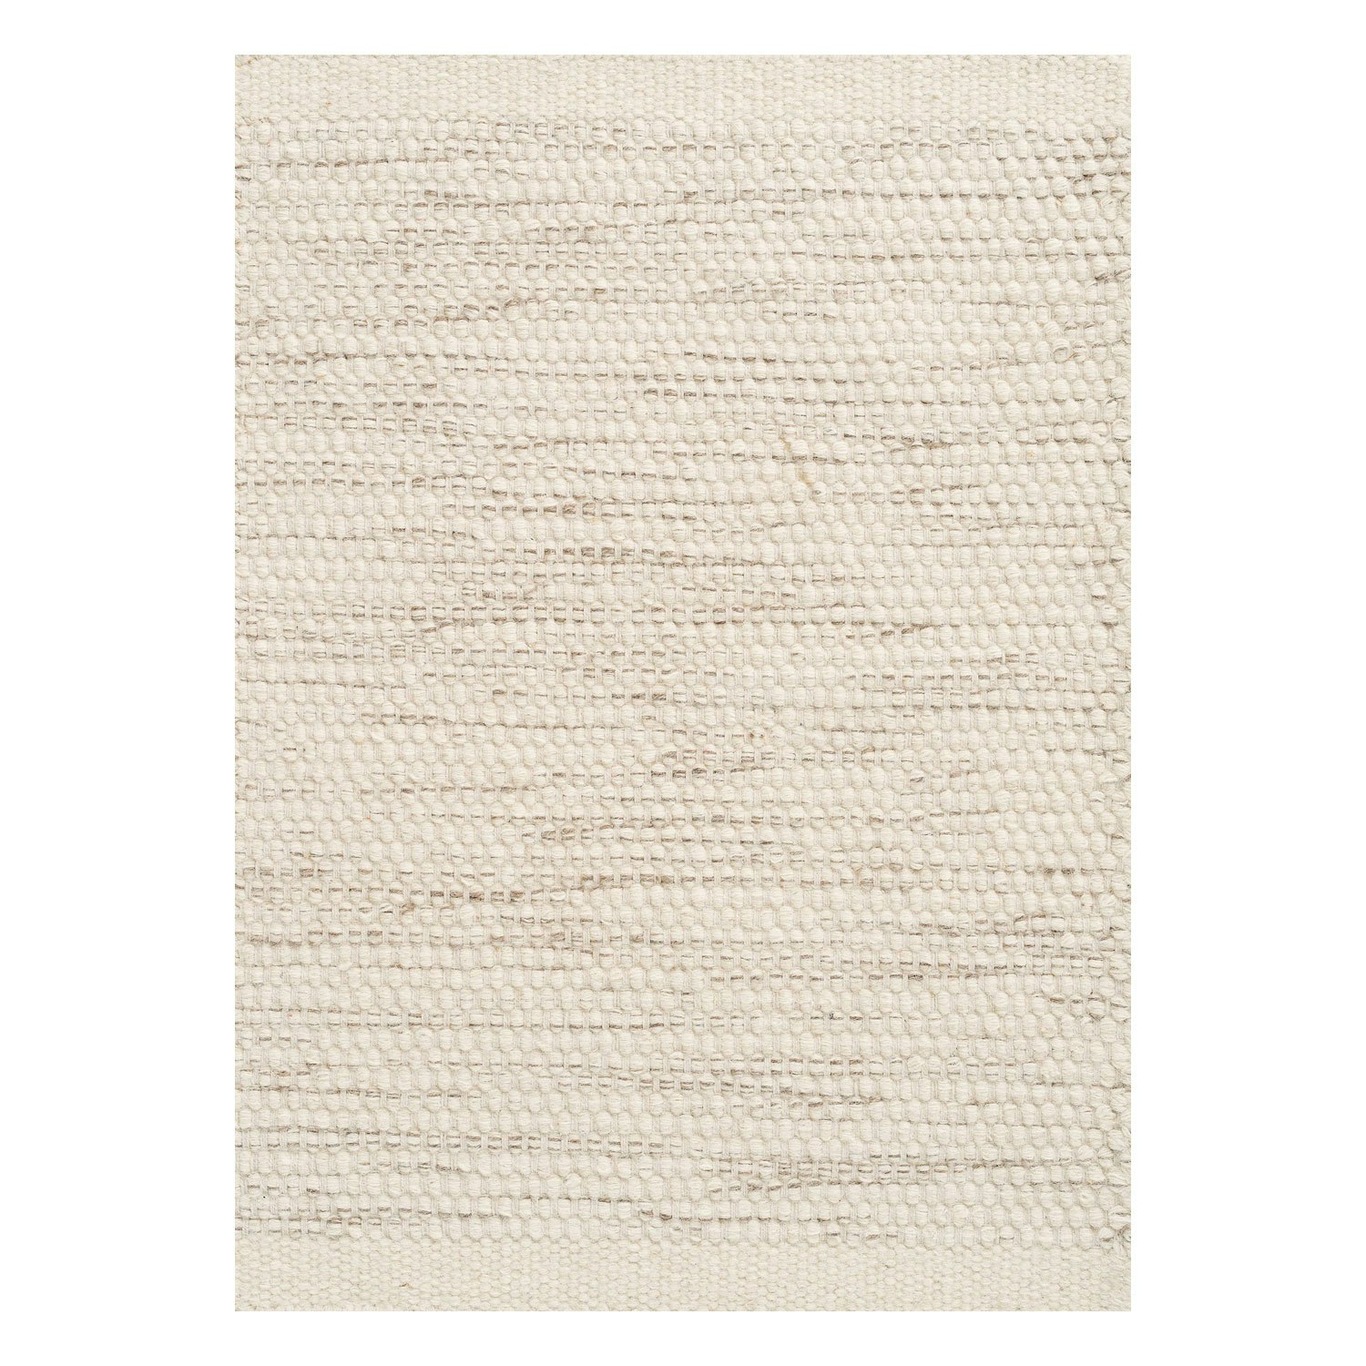 Asko Rug Off-white, 140x200 cm